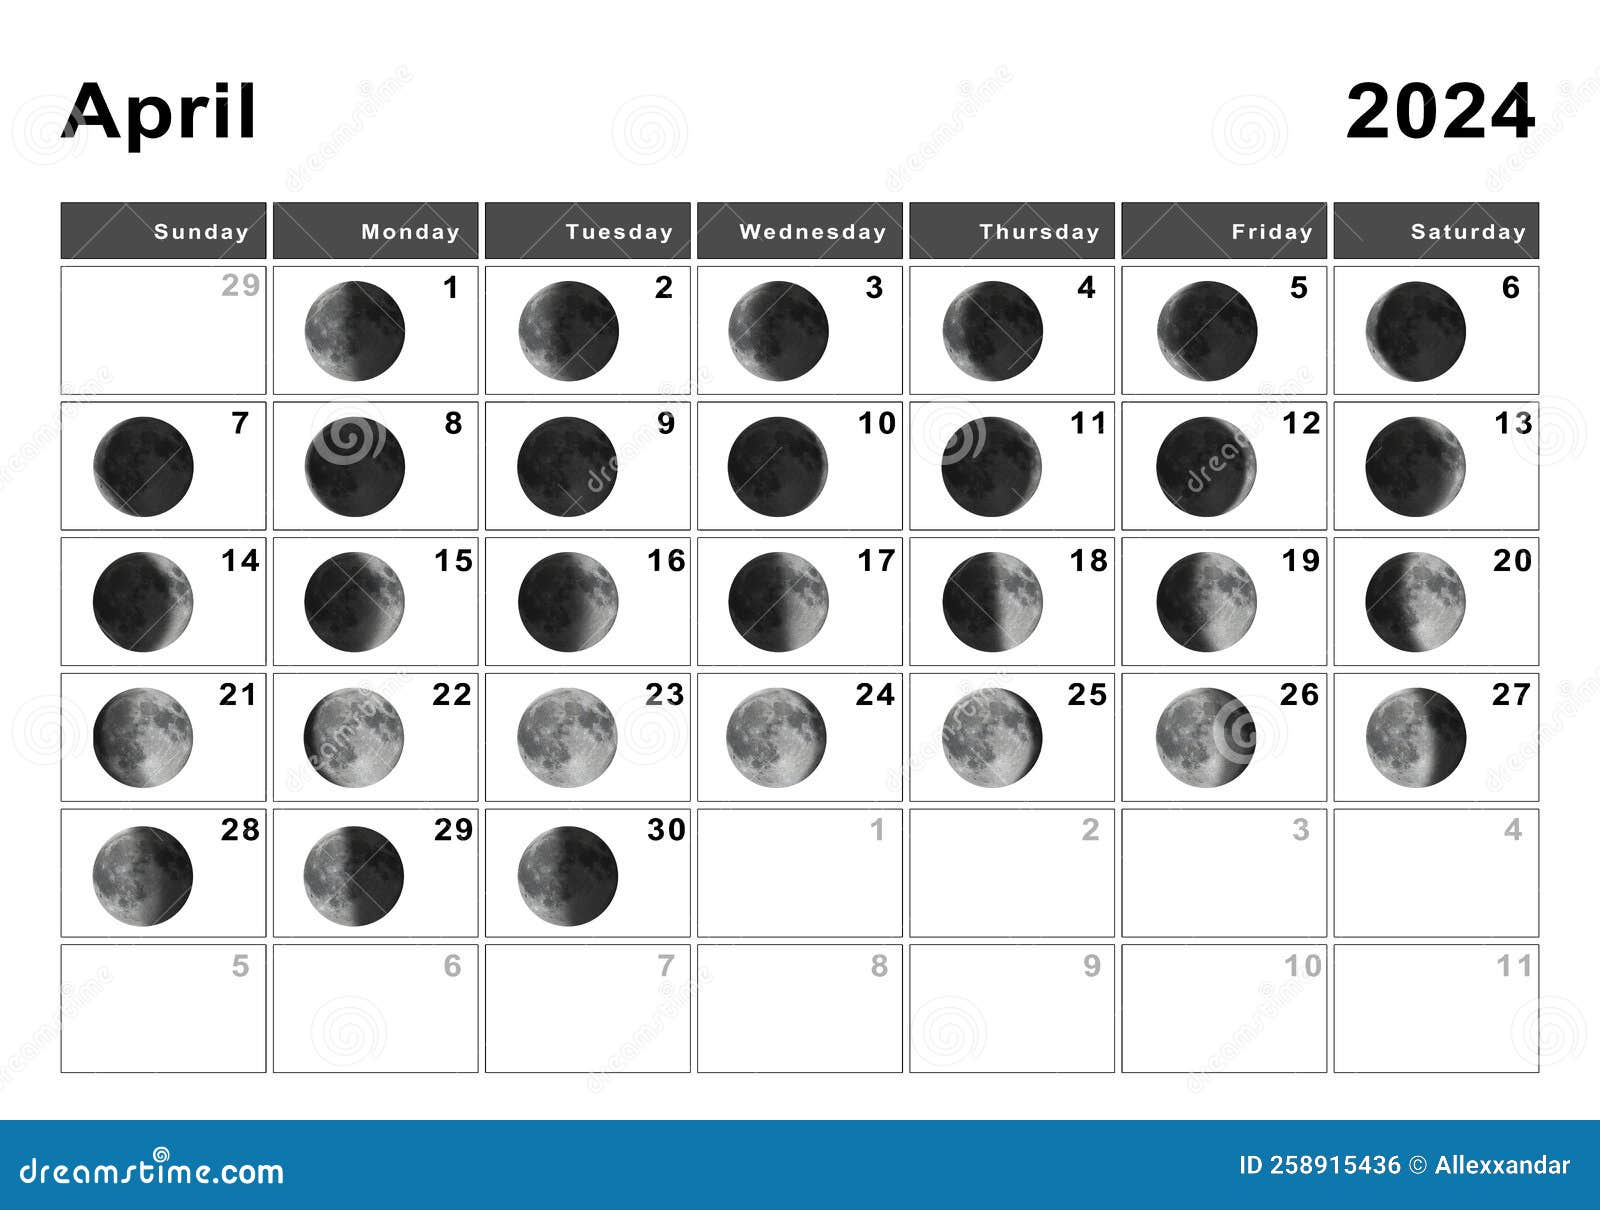 April 2024 Lunar Calendar, Moon Cycles Stock Illustration inside April Lunar Calendar 2024